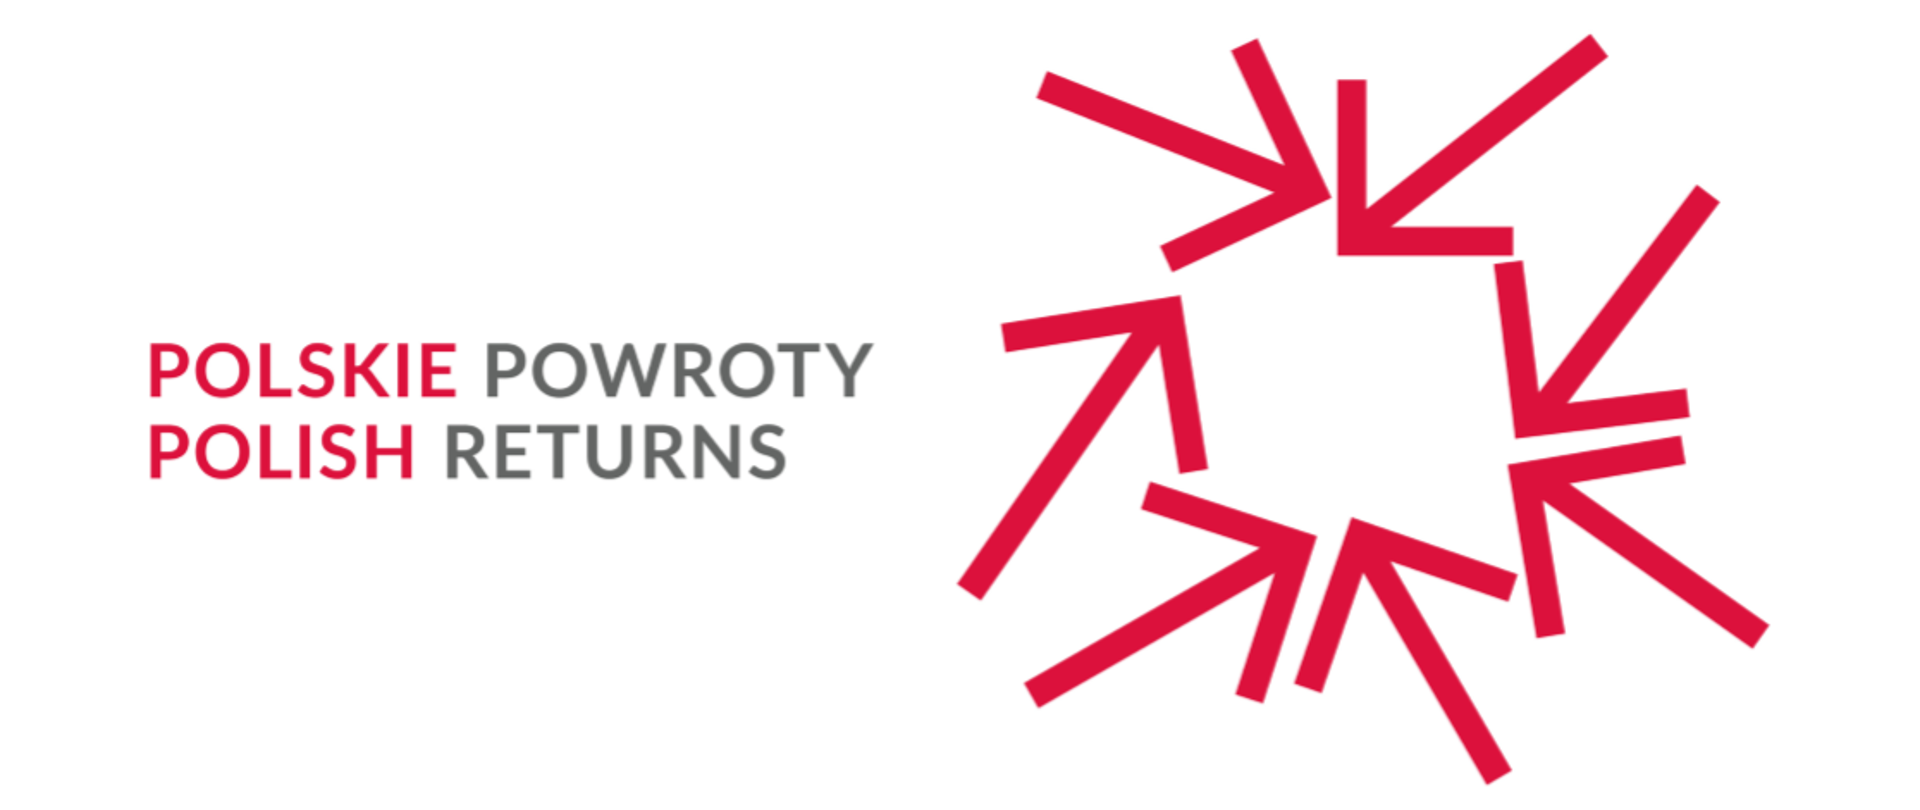 Polskie Powroty_Program stypendialny NAWA_logo